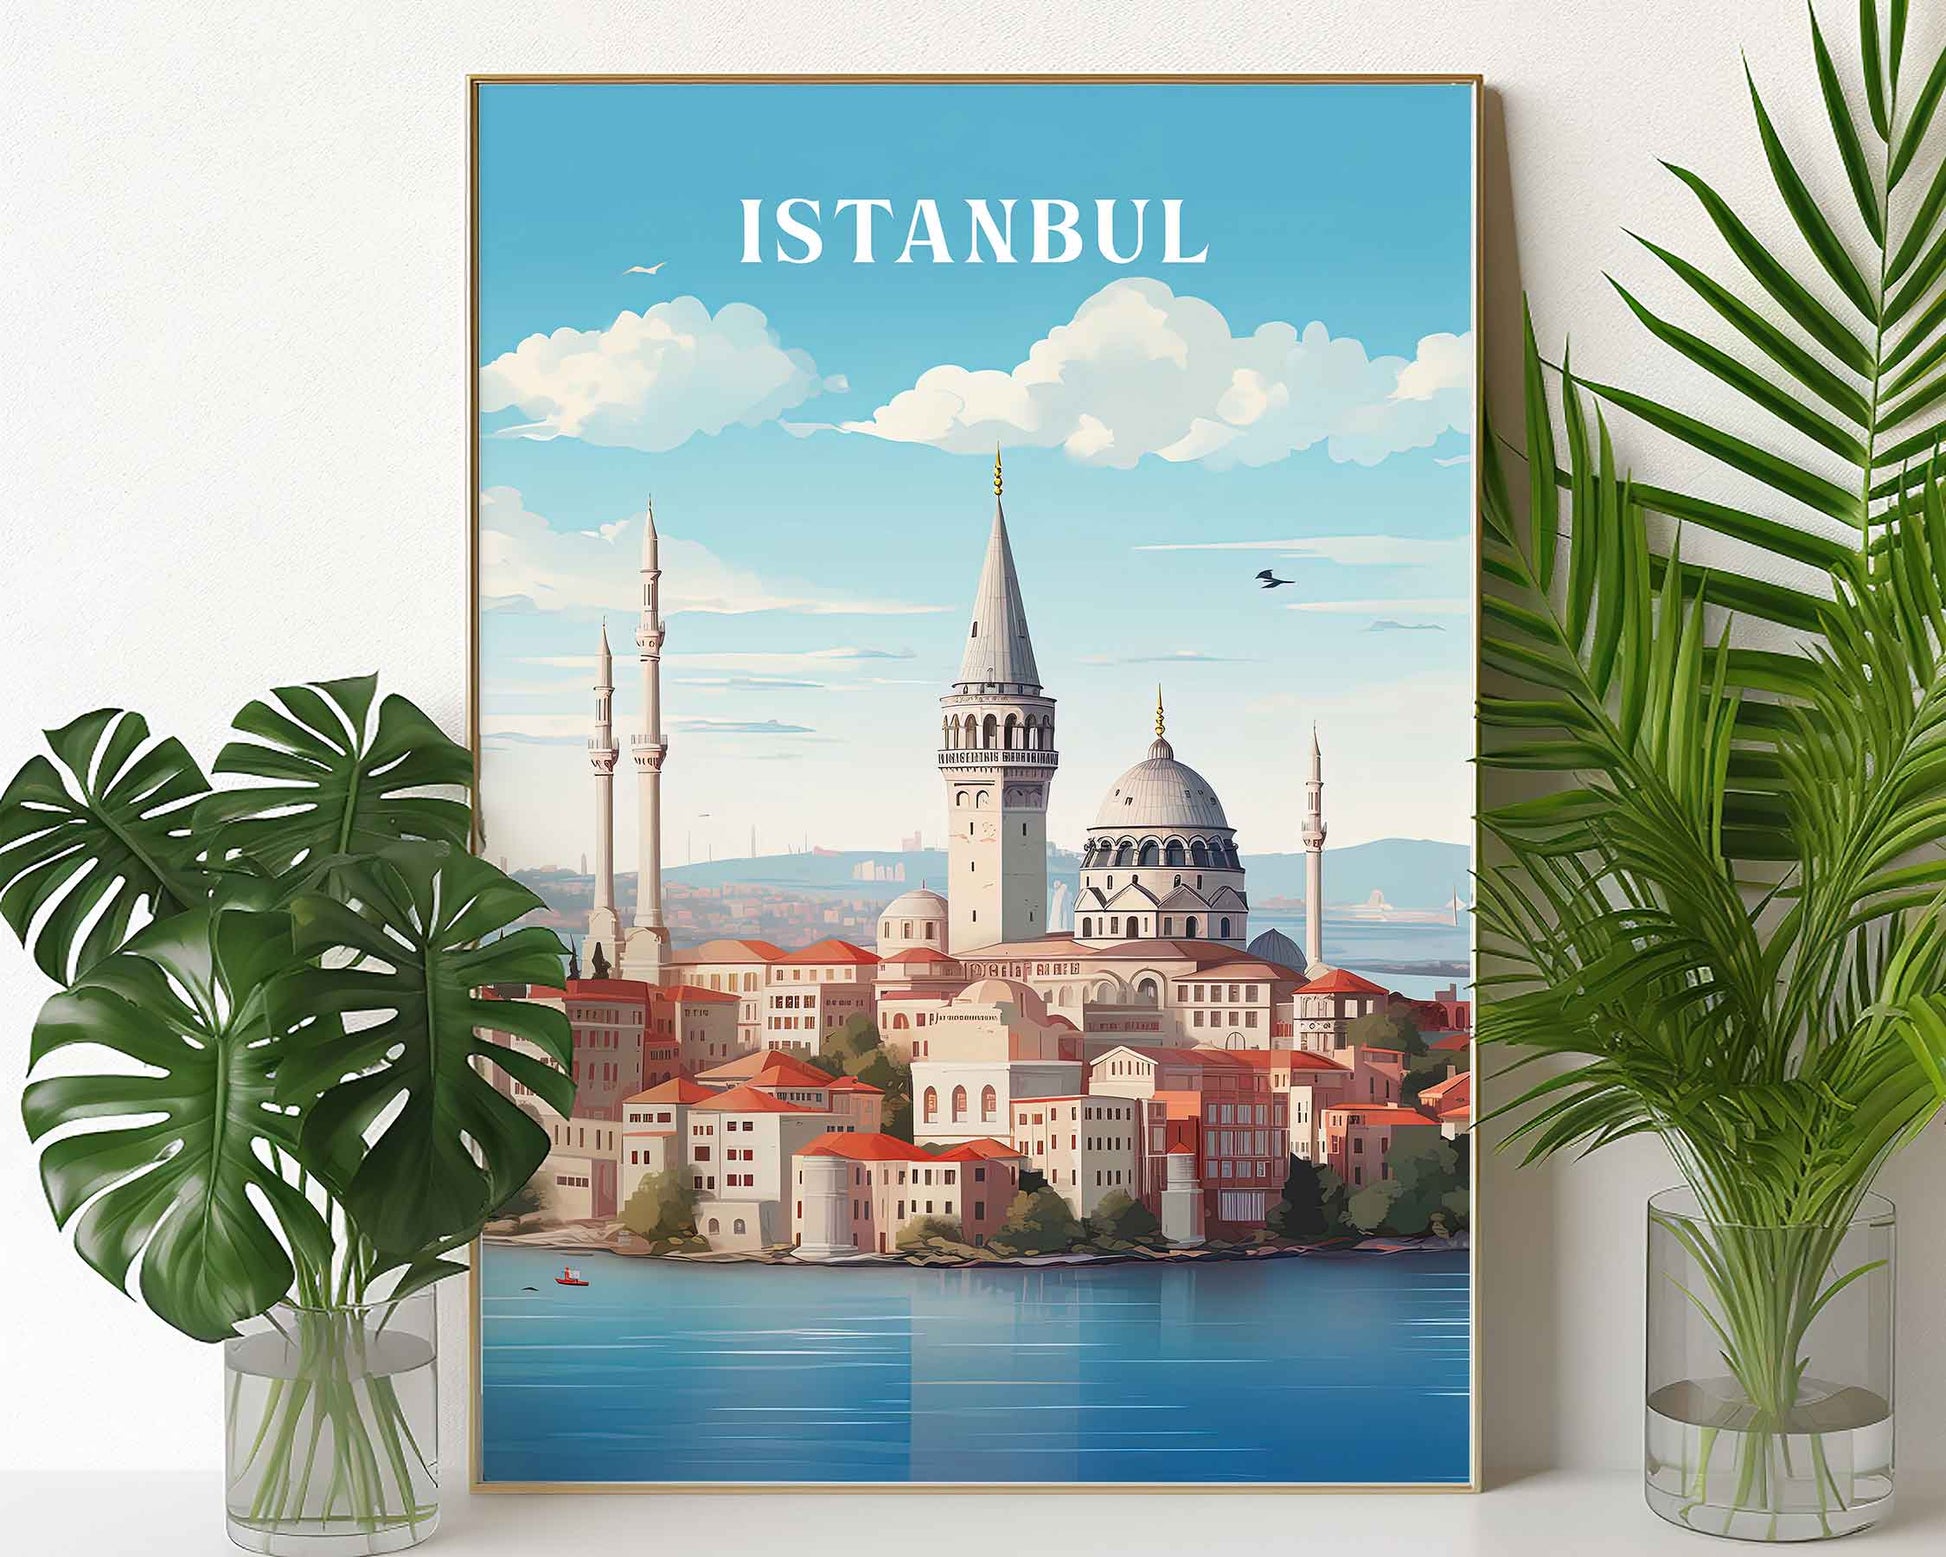 Framed Image of Istanbul Turkey Travel Poster Prints Wall Art Illustration